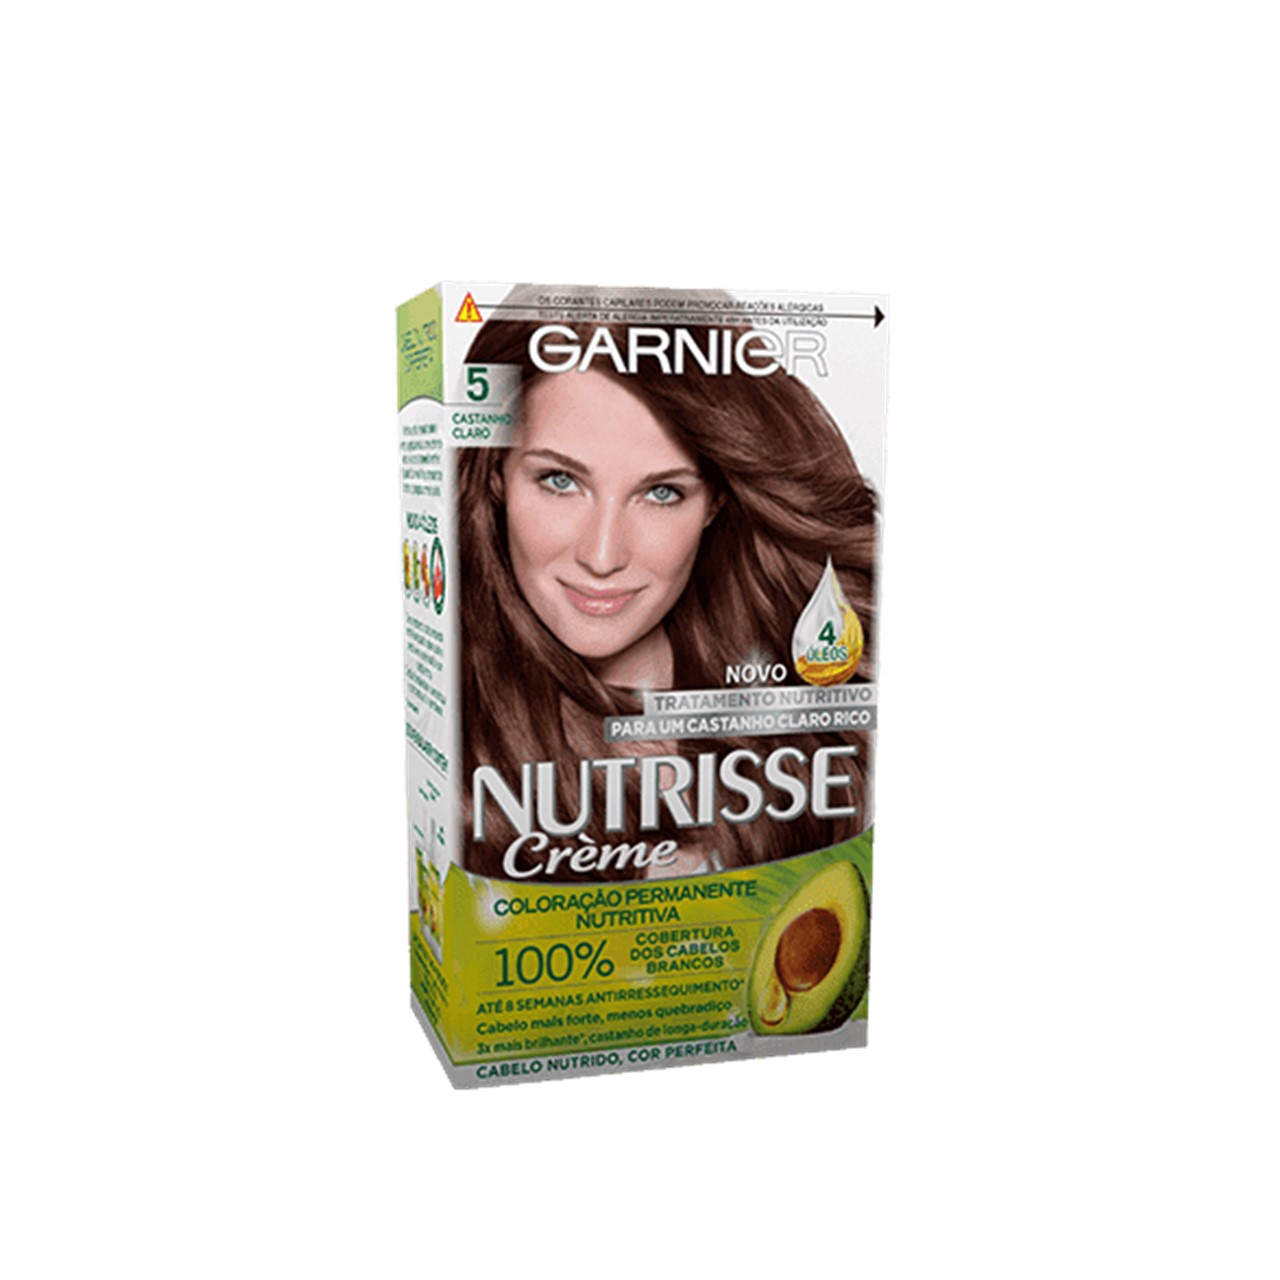 Garnier Nutrisse Crème 5 Brown Permanent Hair Dye